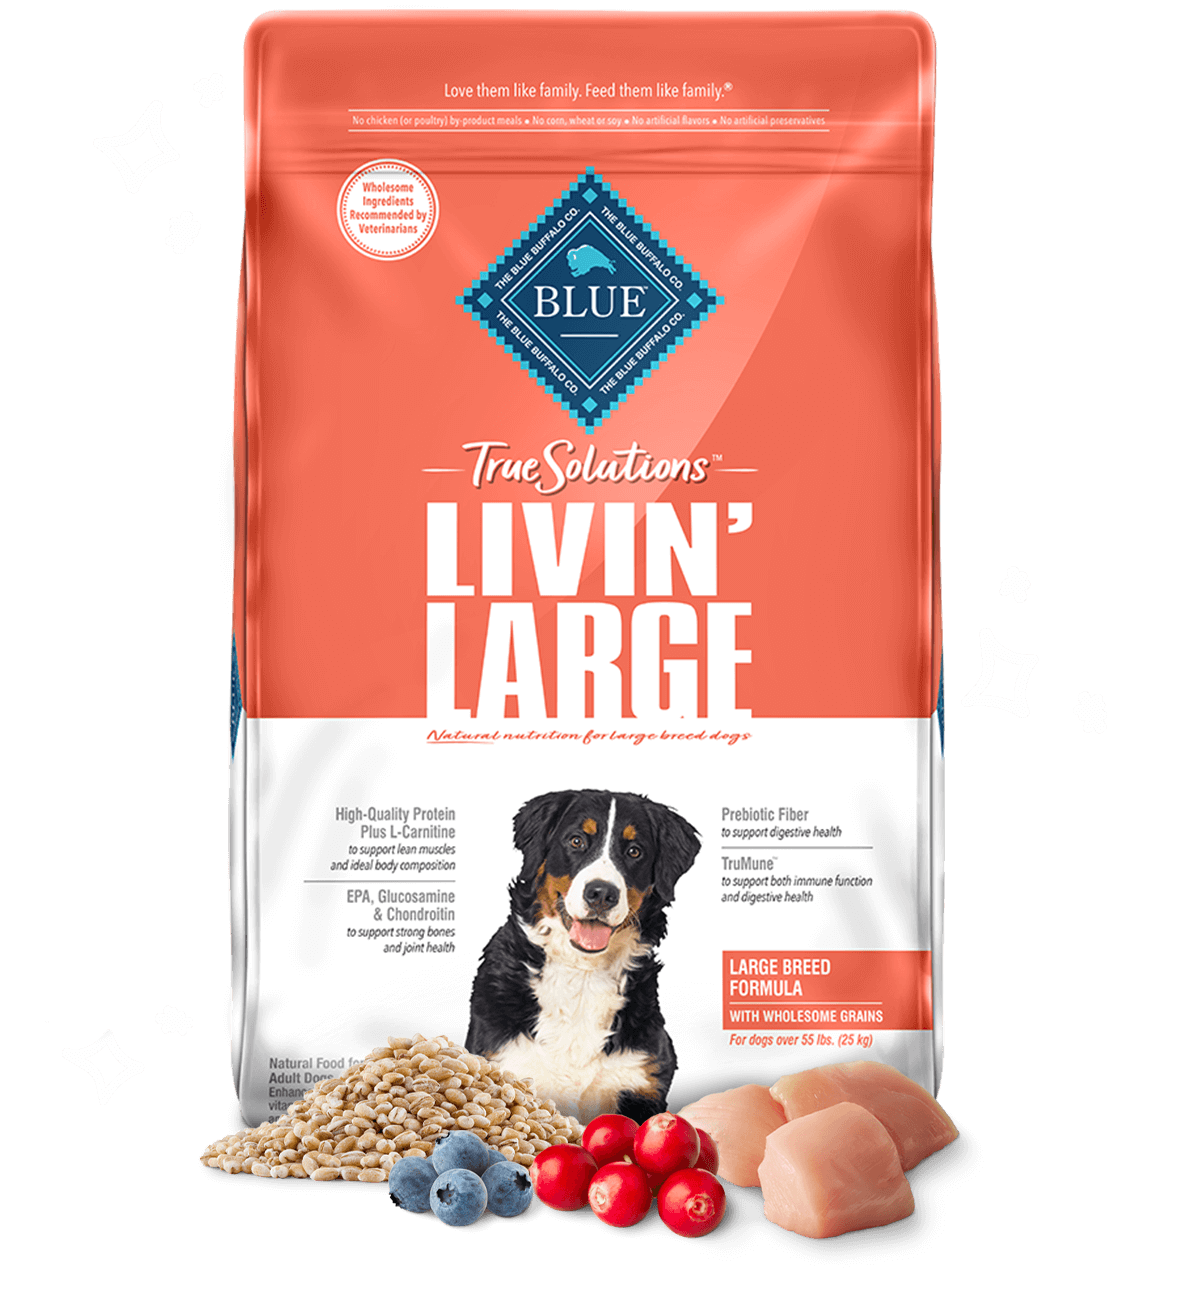 blue true solutions livin’ large large-breed formula dog dry food